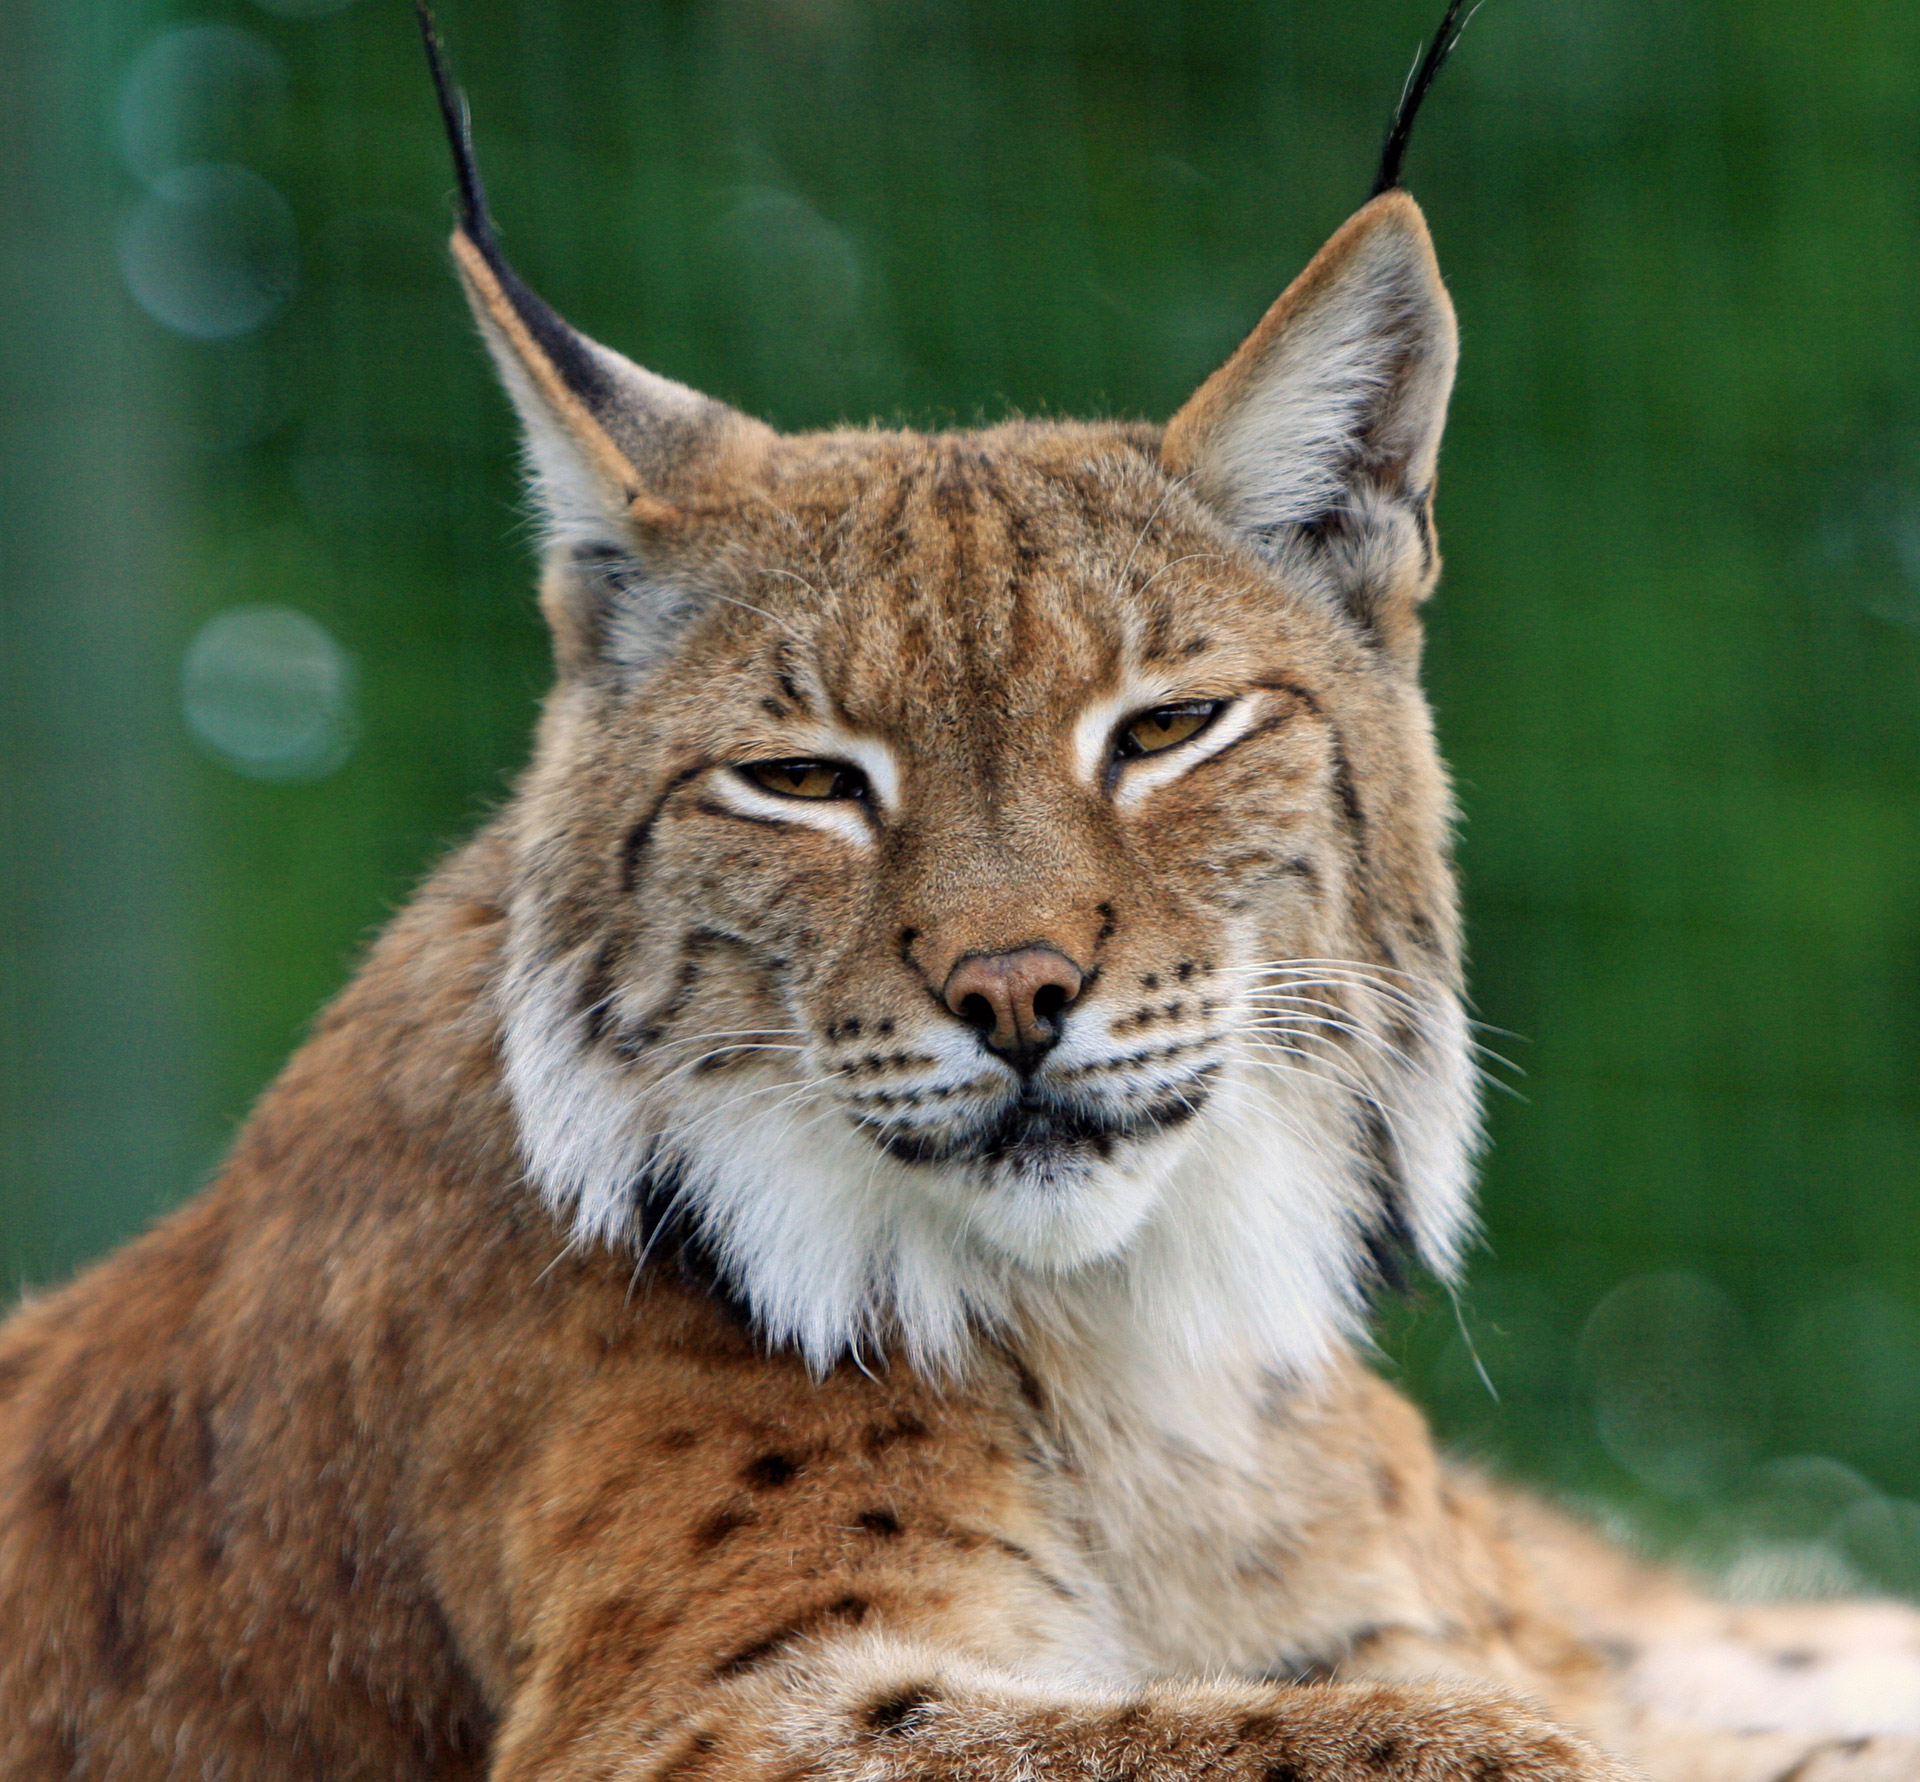 Close-up portrait of a beautiful bobcat or lynx head